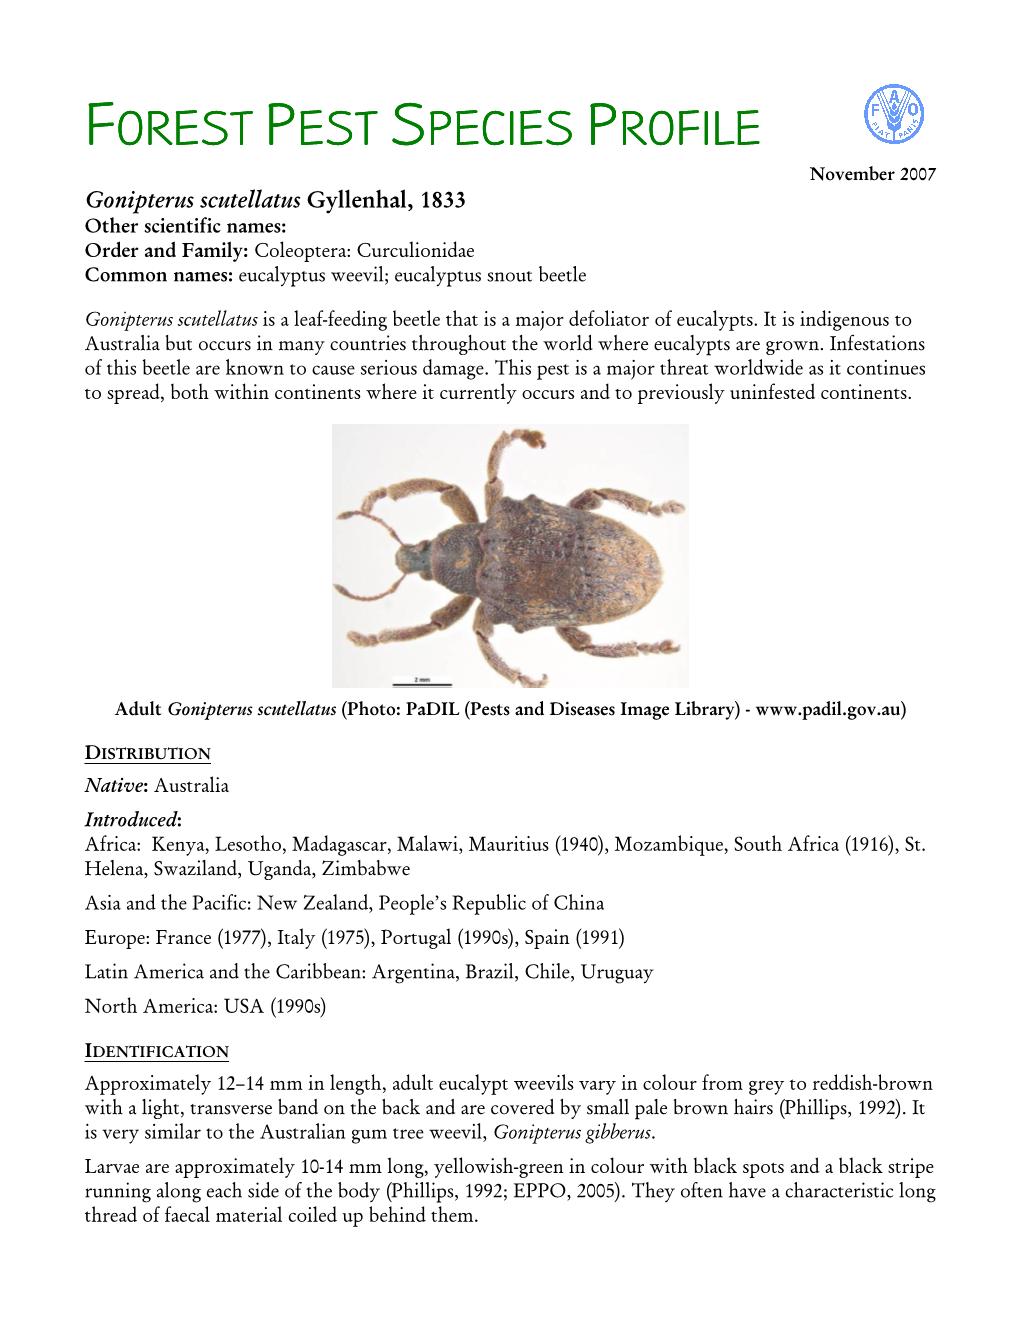 Gonipterus Scutellatus Gyllenhal, 1833 Other Scientific Names: Order and Family: Coleoptera: Curculionidae Common Names: Eucalyptus Weevil; Eucalyptus Snout Beetle